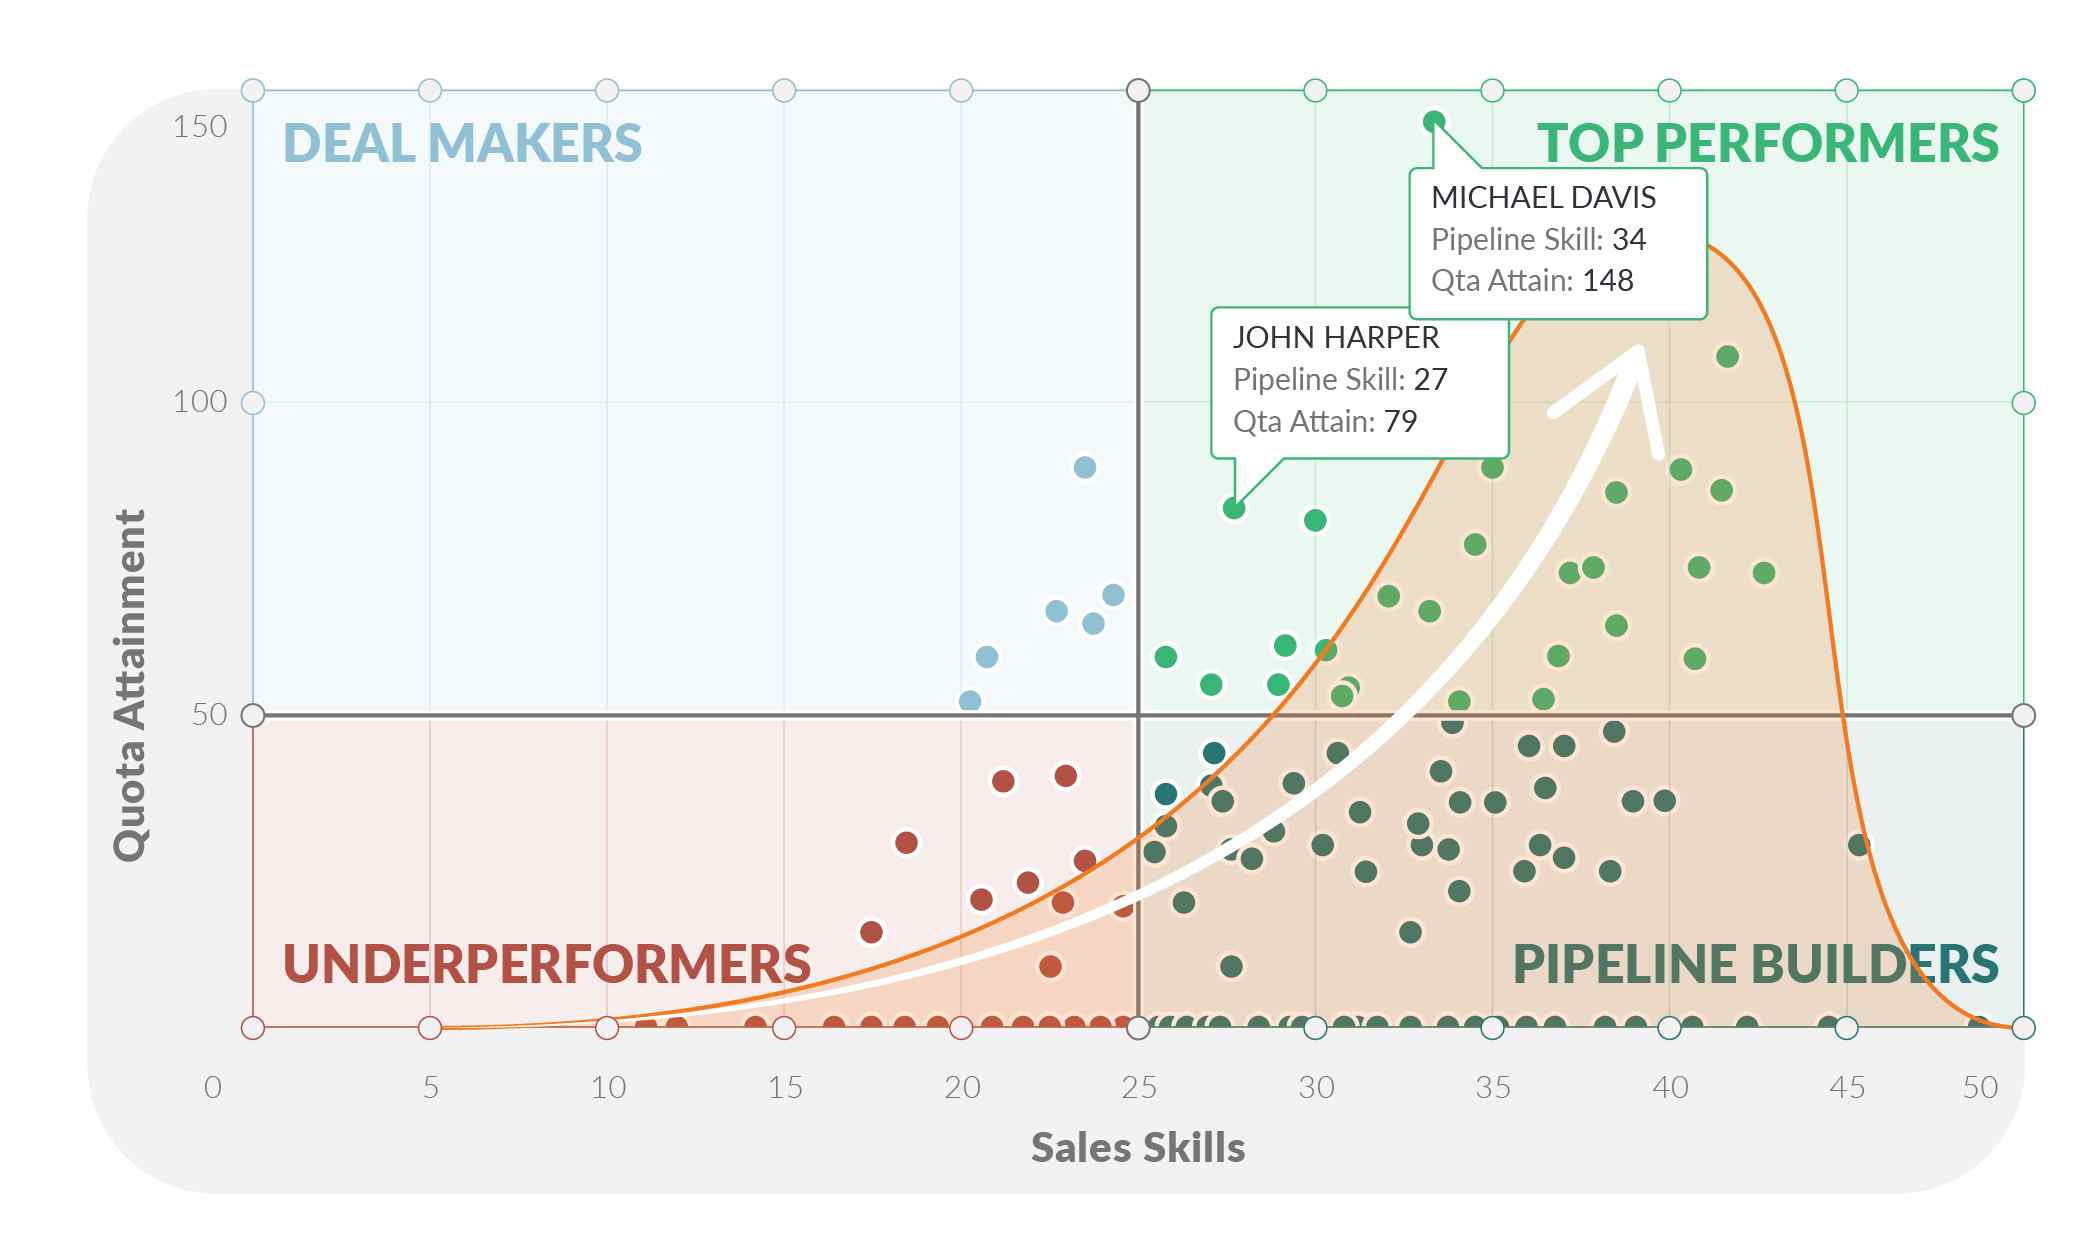 sales effectiveness quadrant www.insidesales.com - evaluating sales performance concept | Sales Effectiveness Metrics for Evaluating Your Team